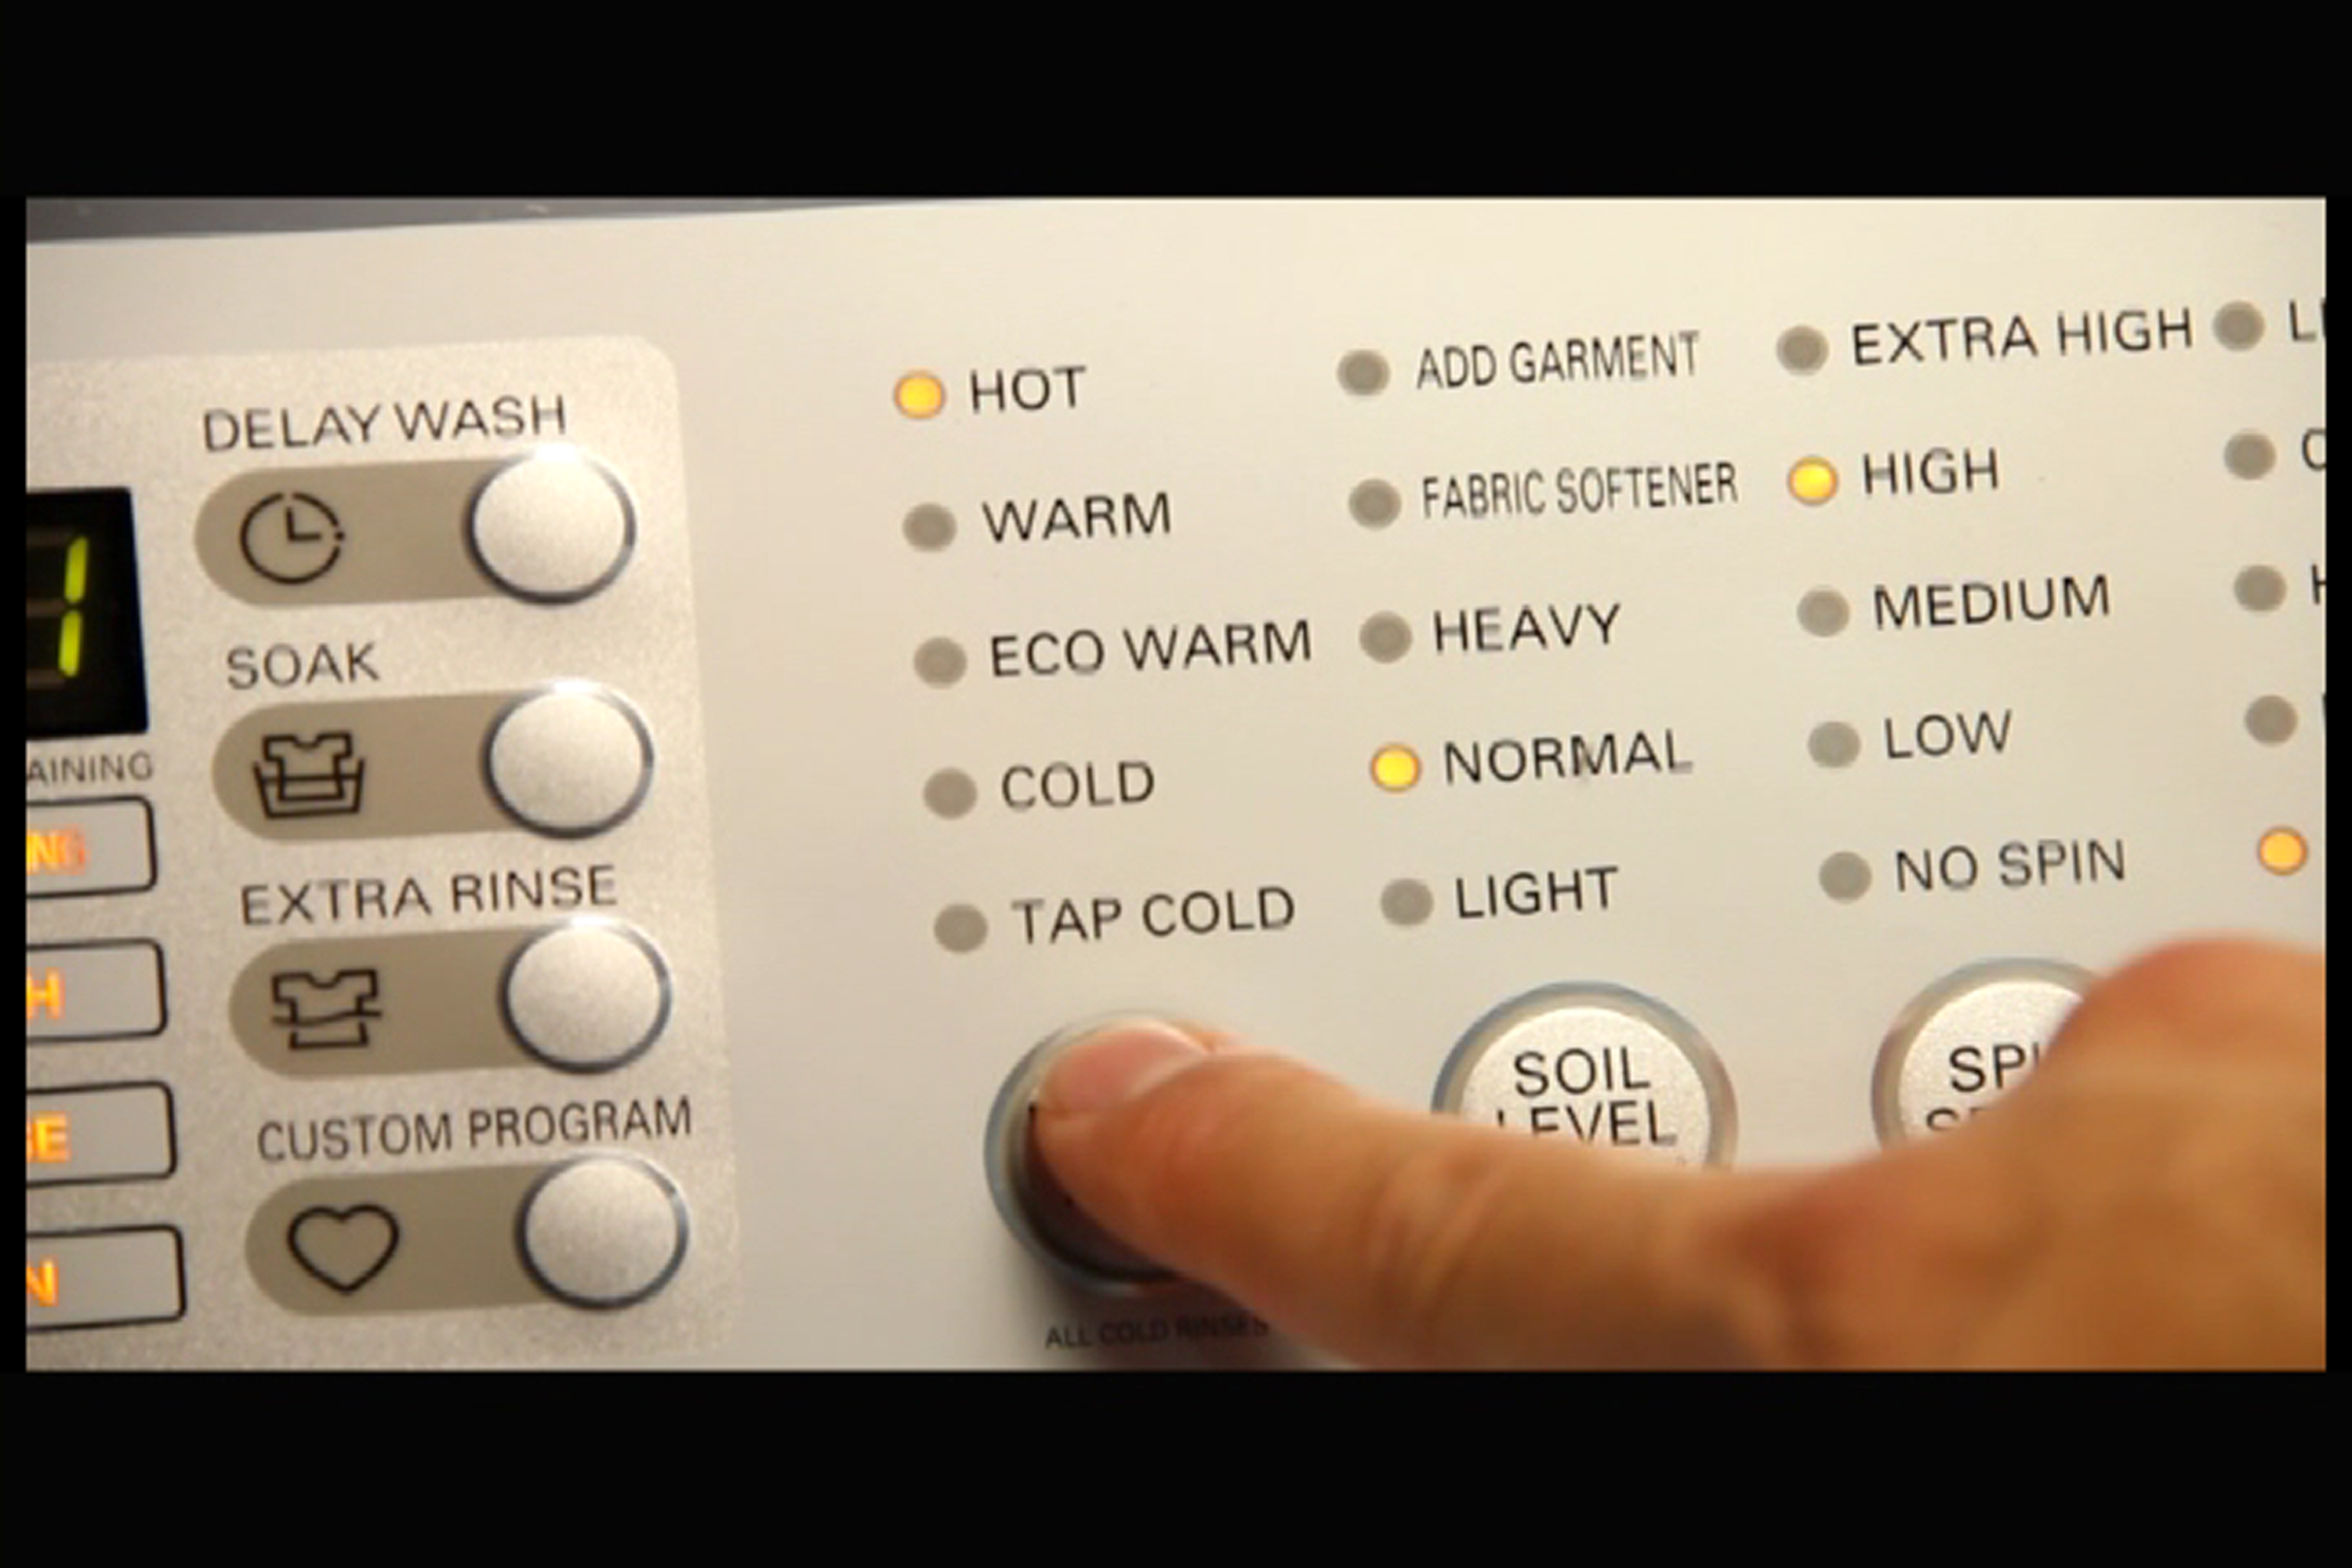 Close-up view of LG washing machine’s control panel